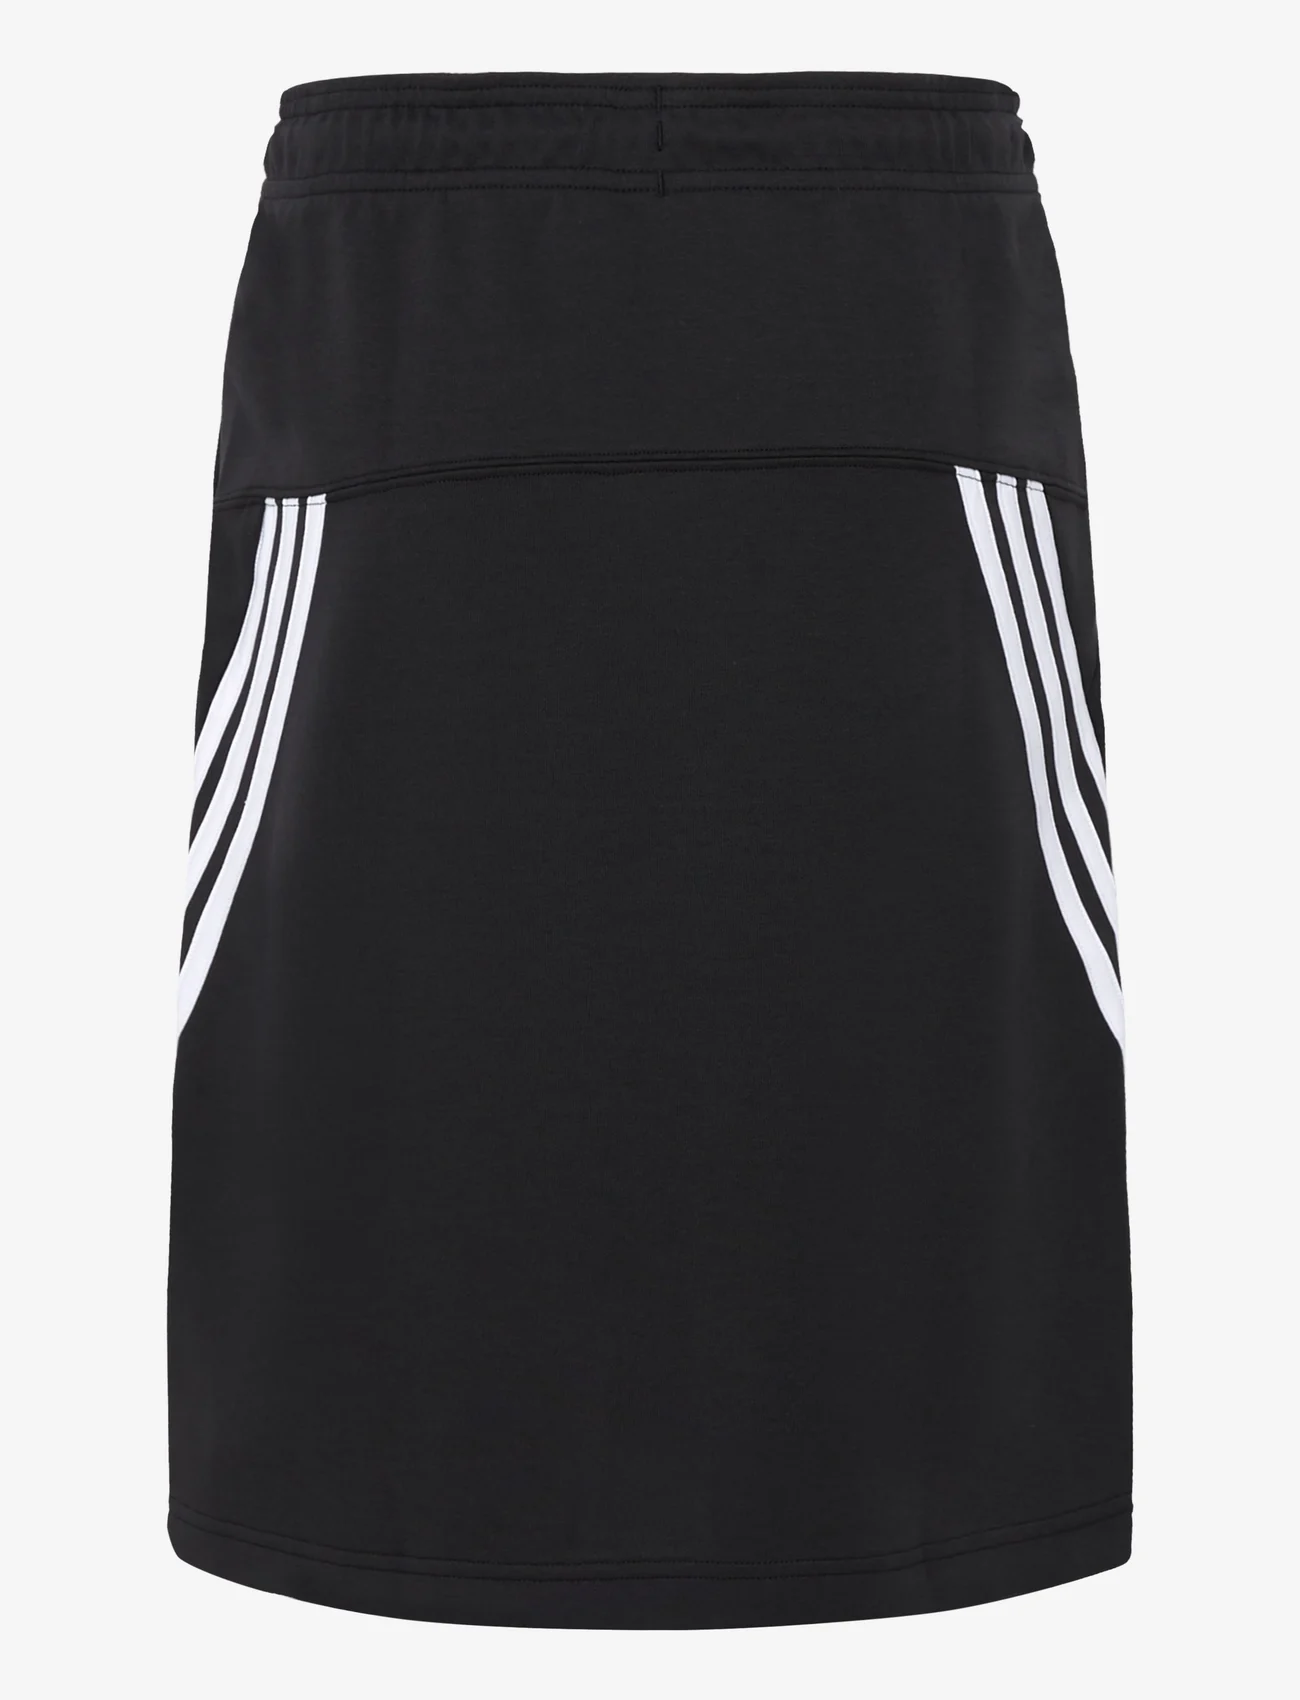 adidas Sportswear - G FI SKIRT - spódnice do kolan i midi - black/white - 1